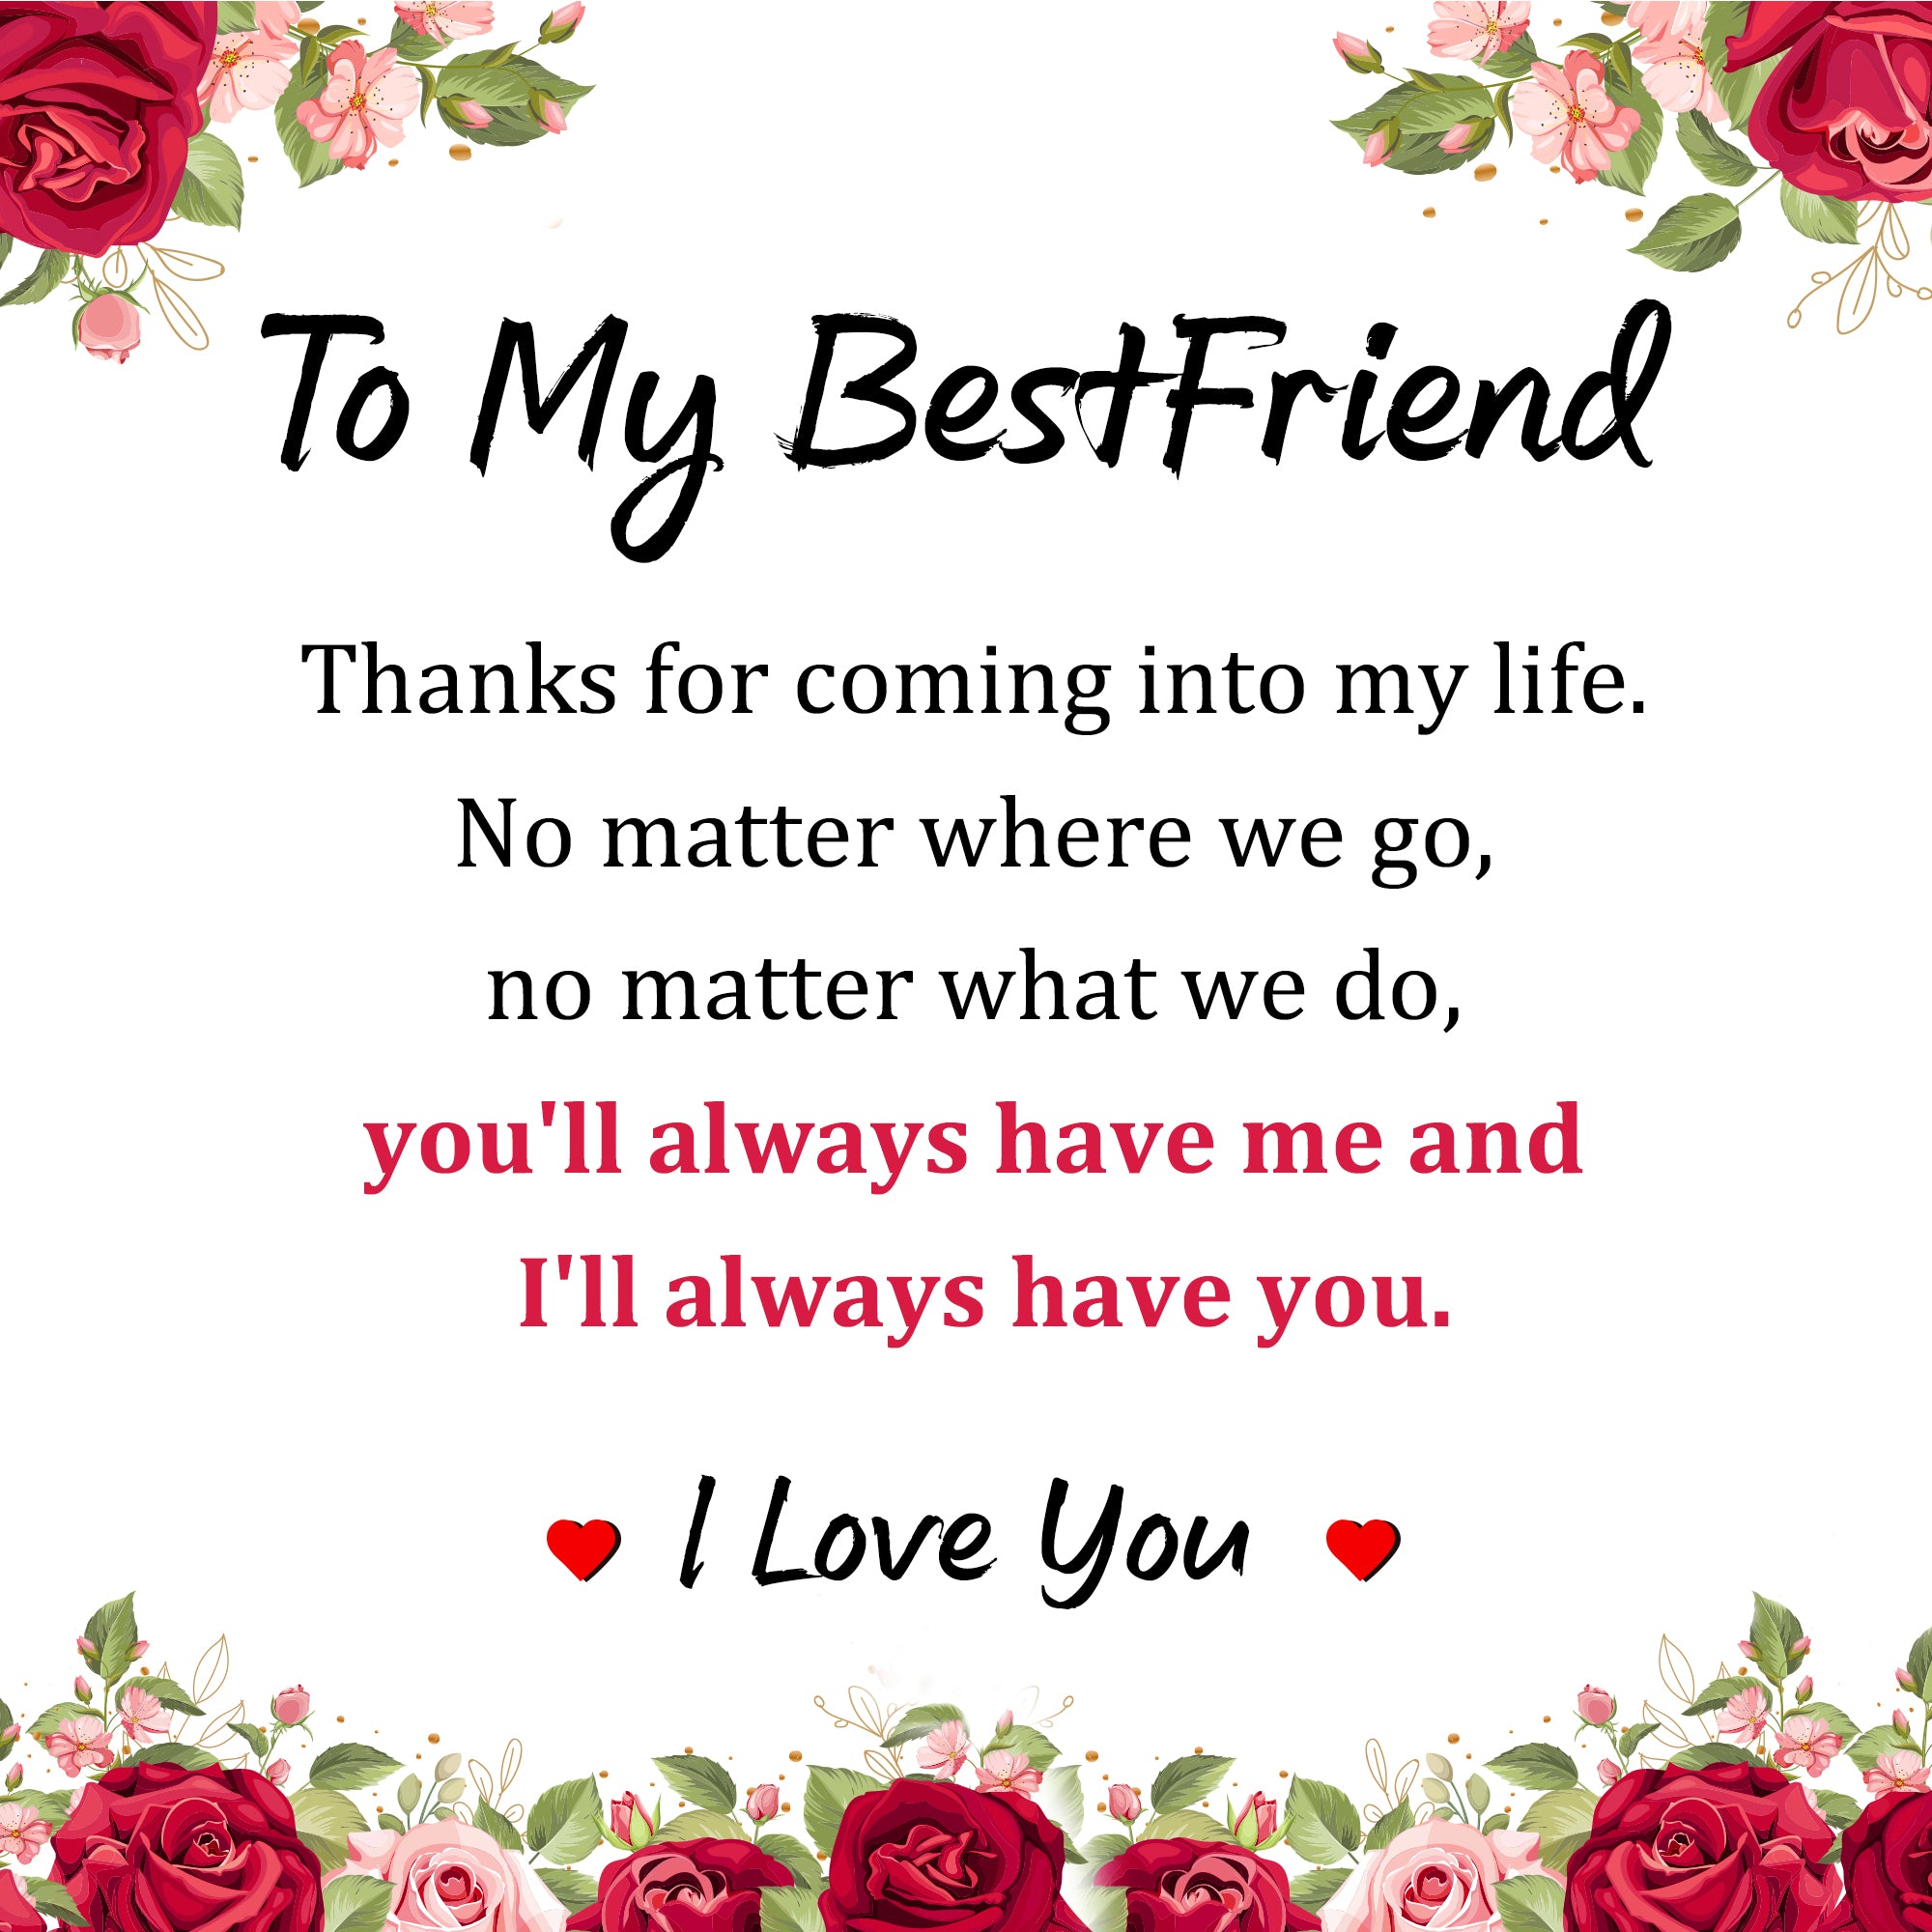 To My Best Friend